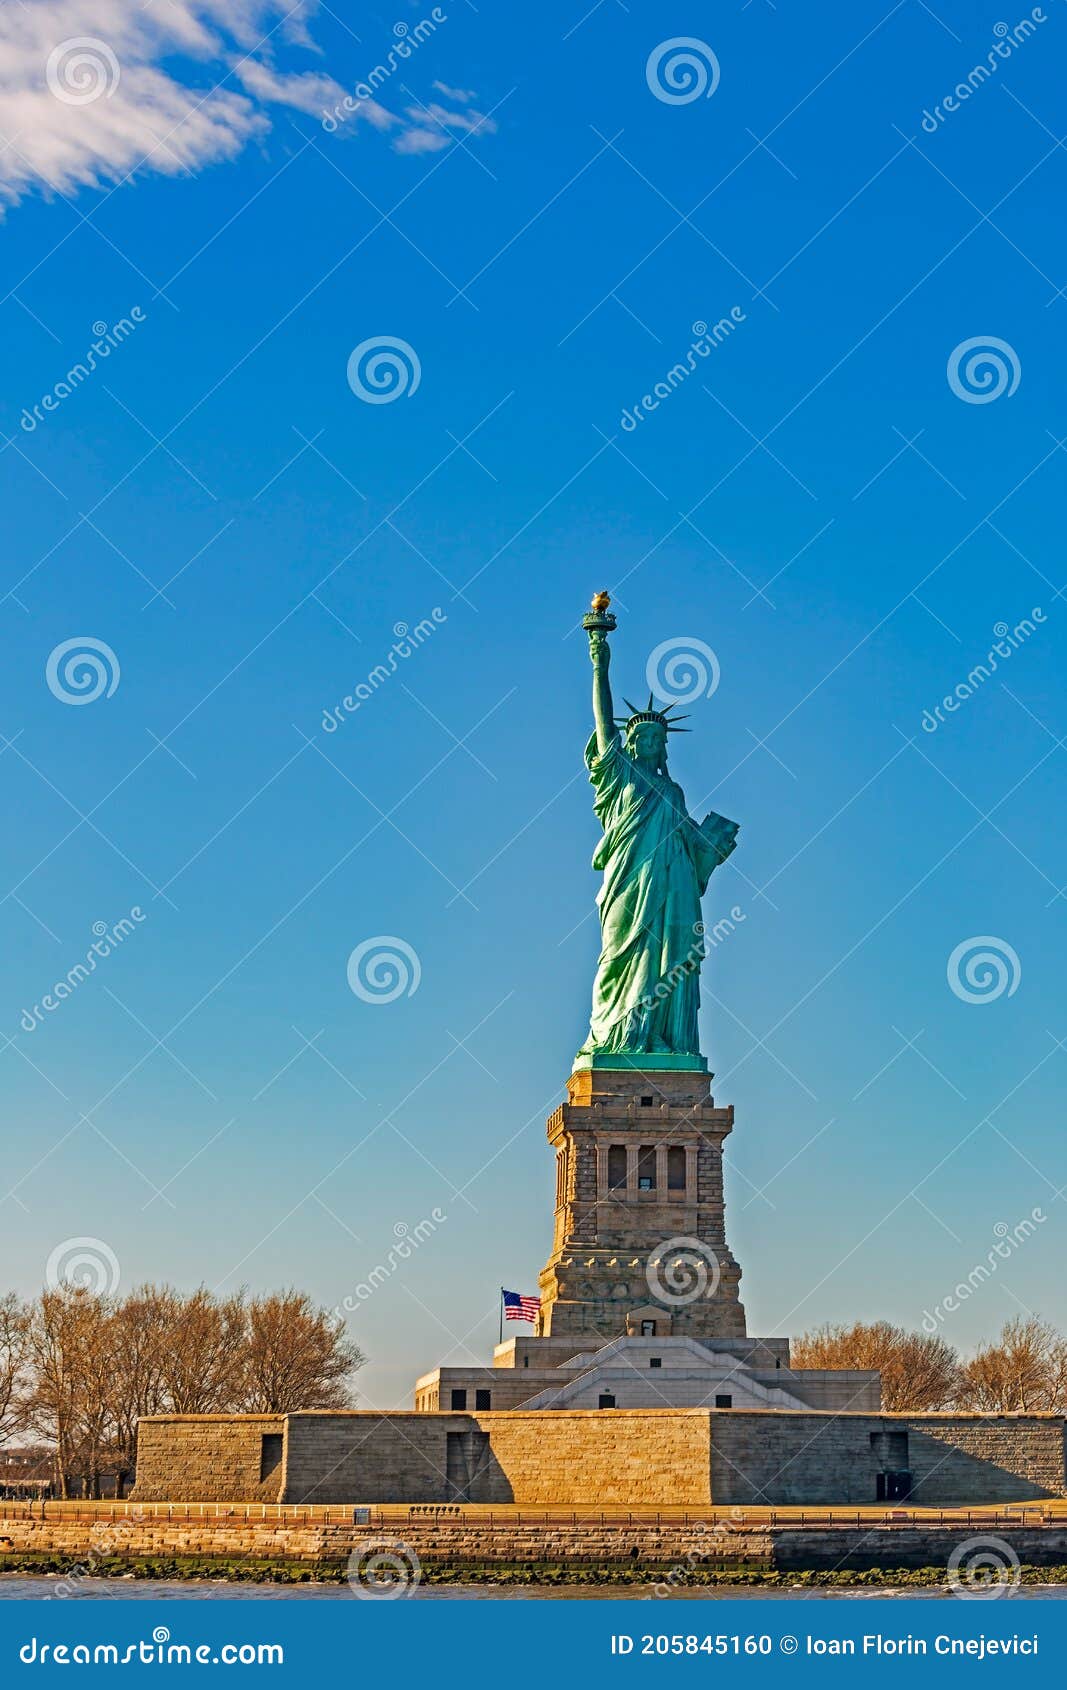 the statue of liberty, new york, usa